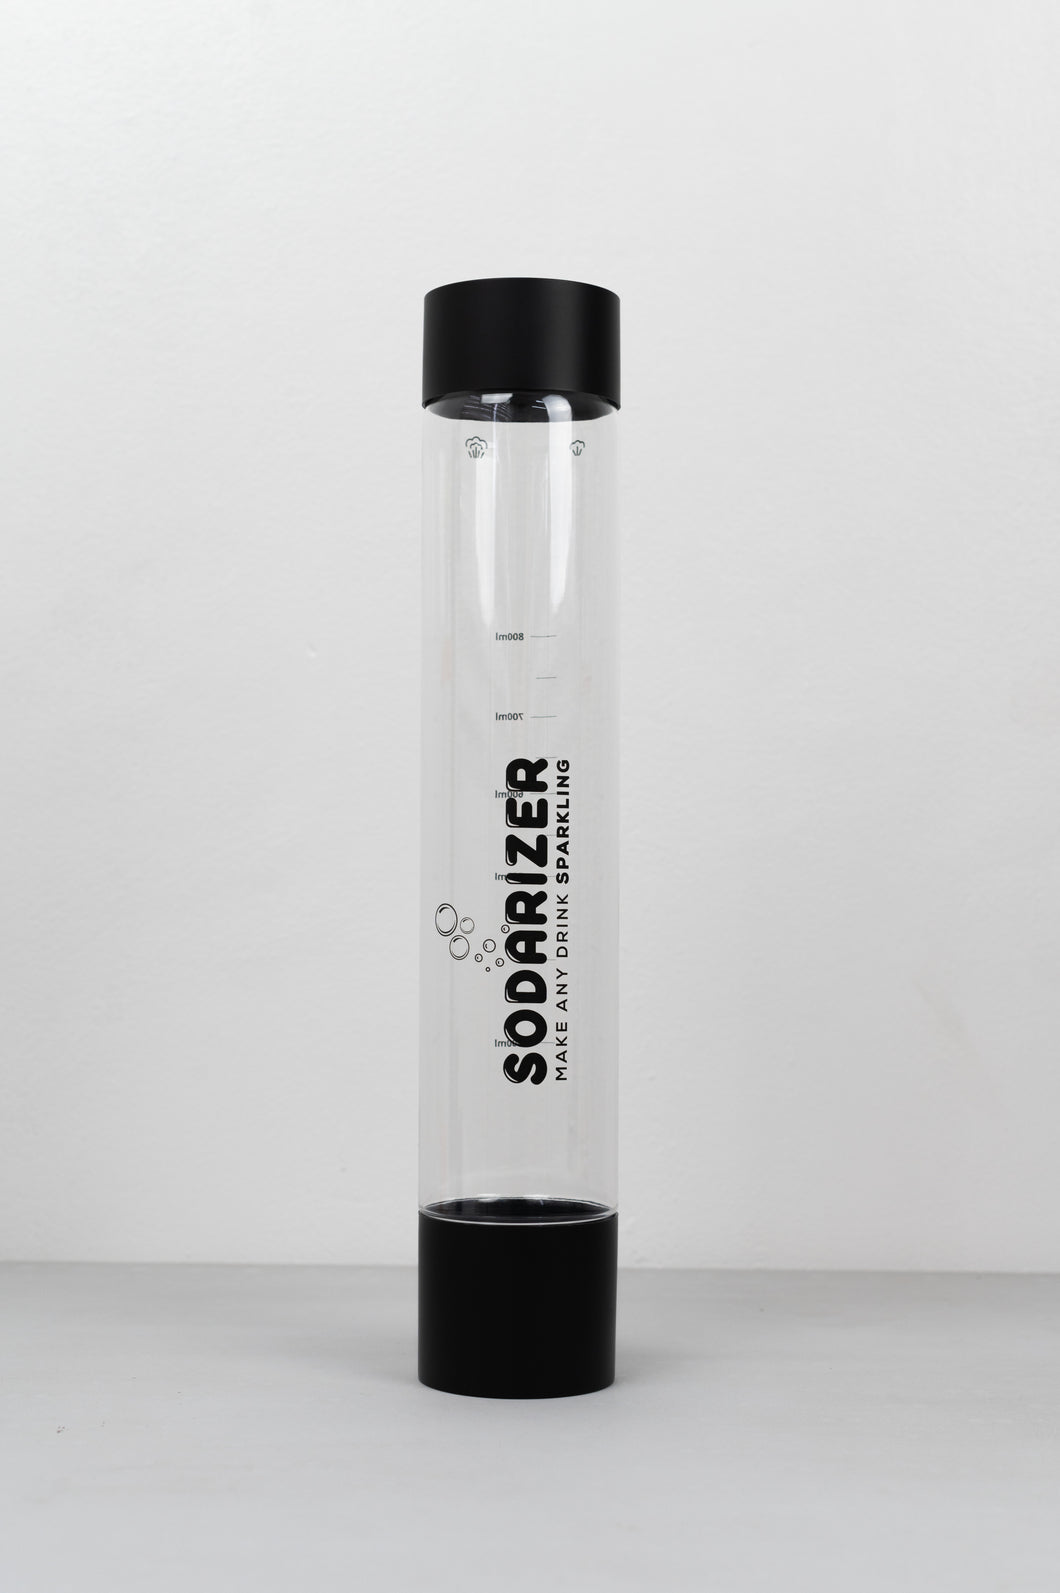 Surge: 1 Liter PET Bottle - Sodarizer